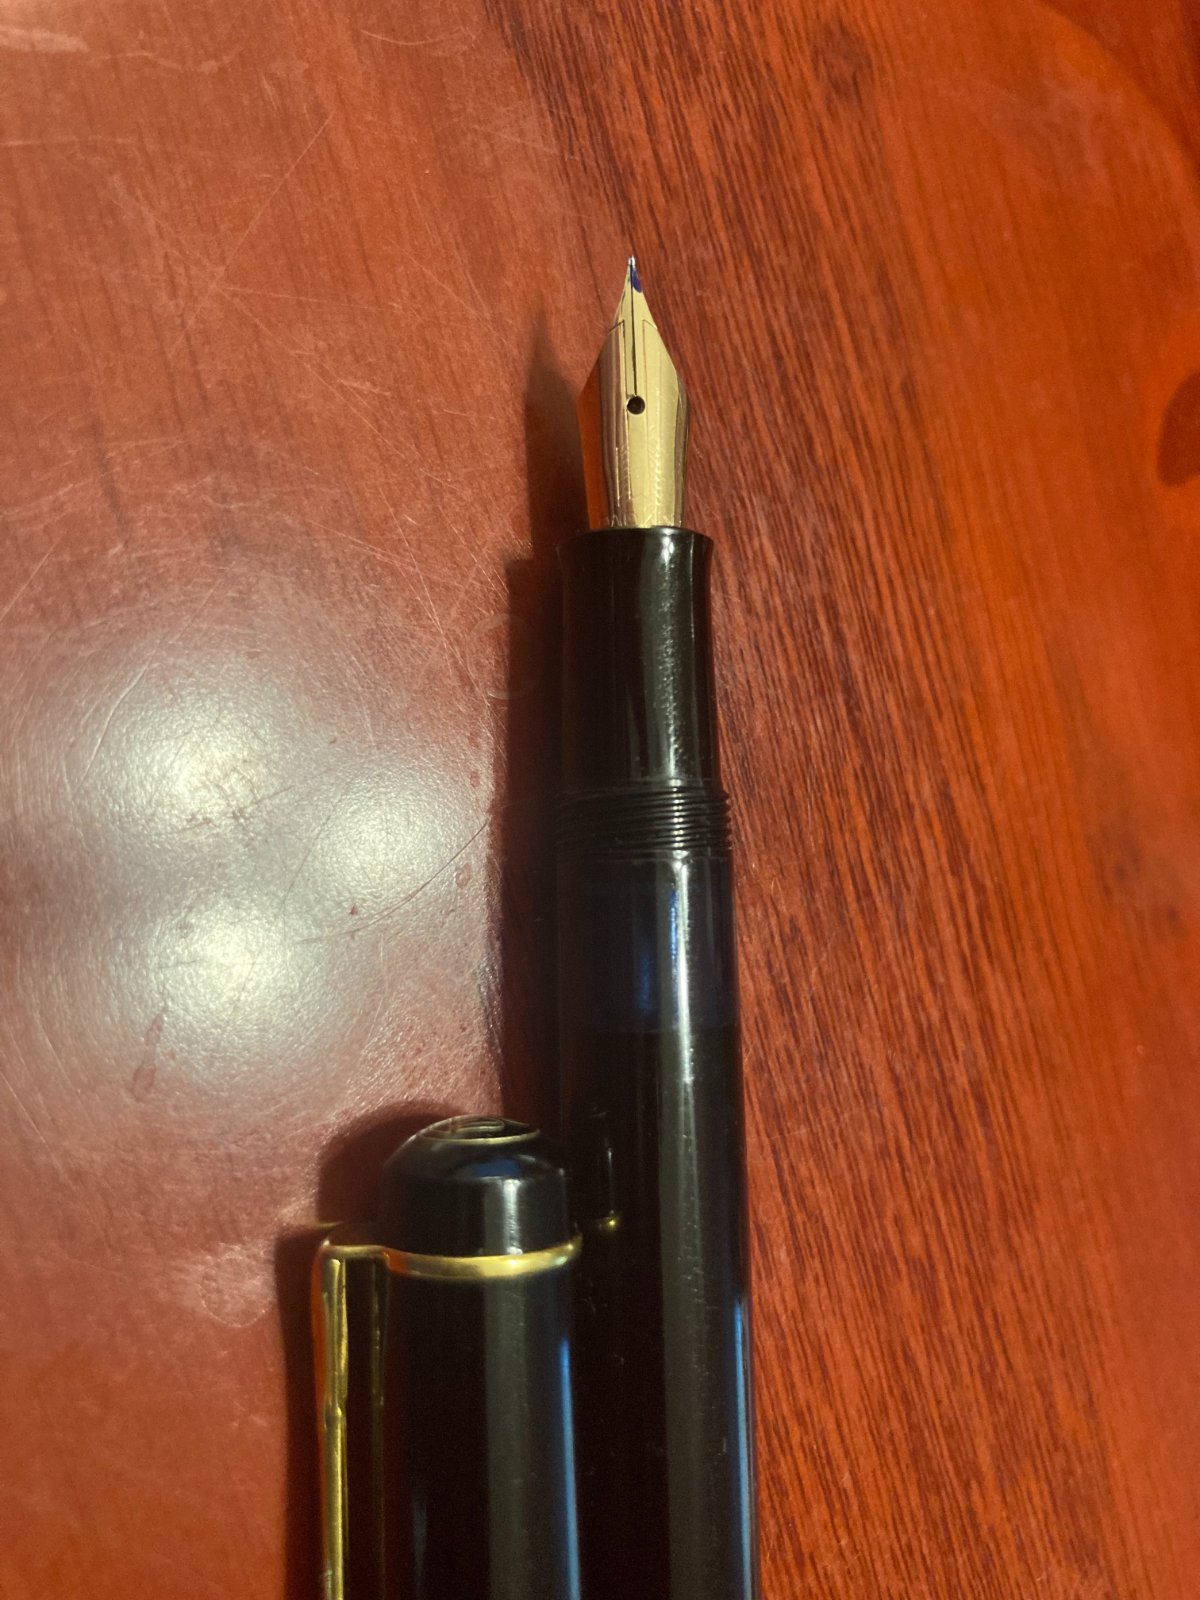 Pelikan M200 Fountain Pen - Black, Gold Plated Trim, Italic Nib (Near Mint,  Works Well) - Peyton Street Pens